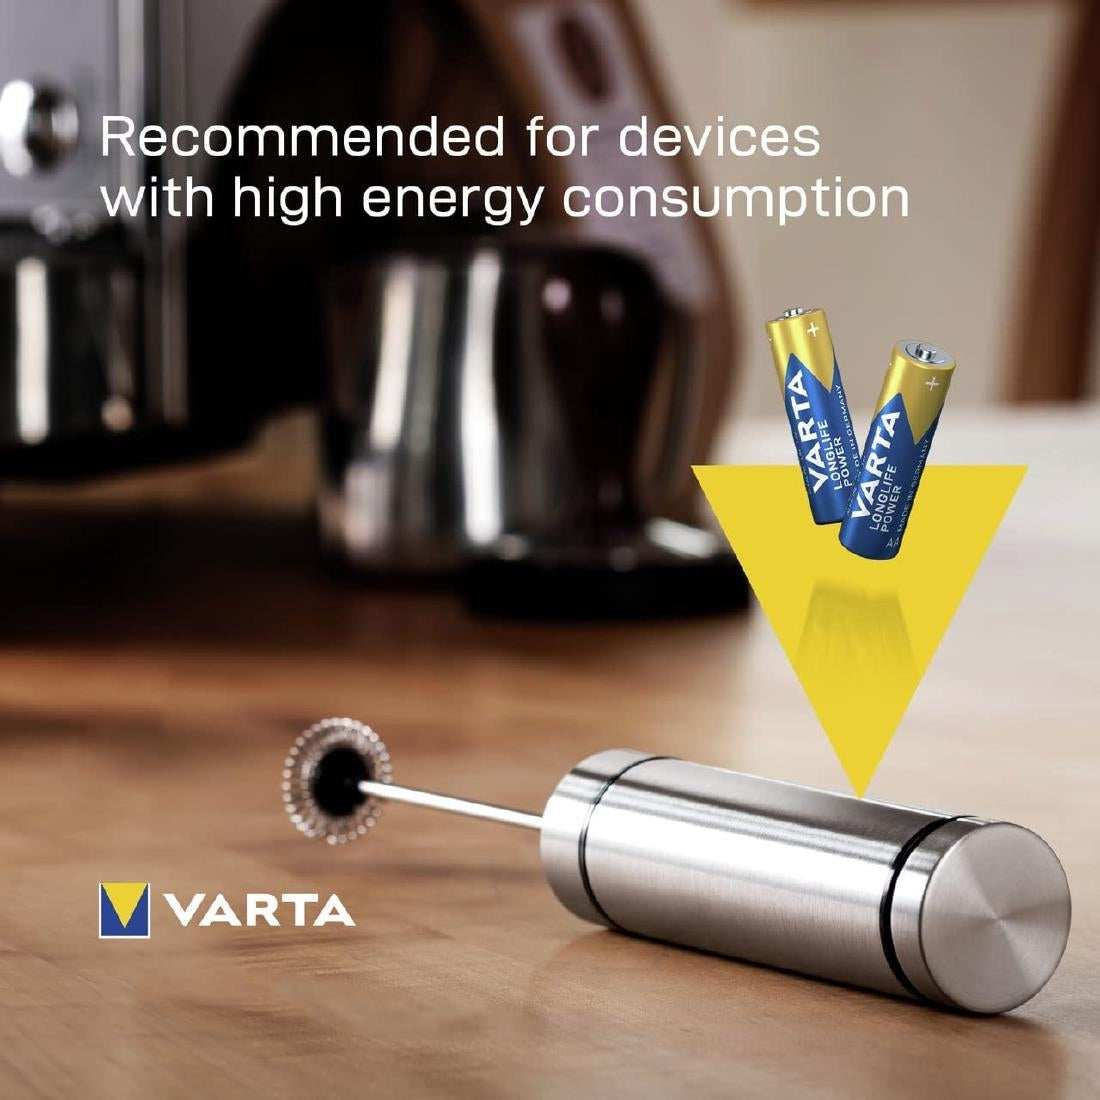 CU360 Varta Longlife Power Batteries AA 4+4 Free Promo Pack JD Catering Equipment Solutions Ltd